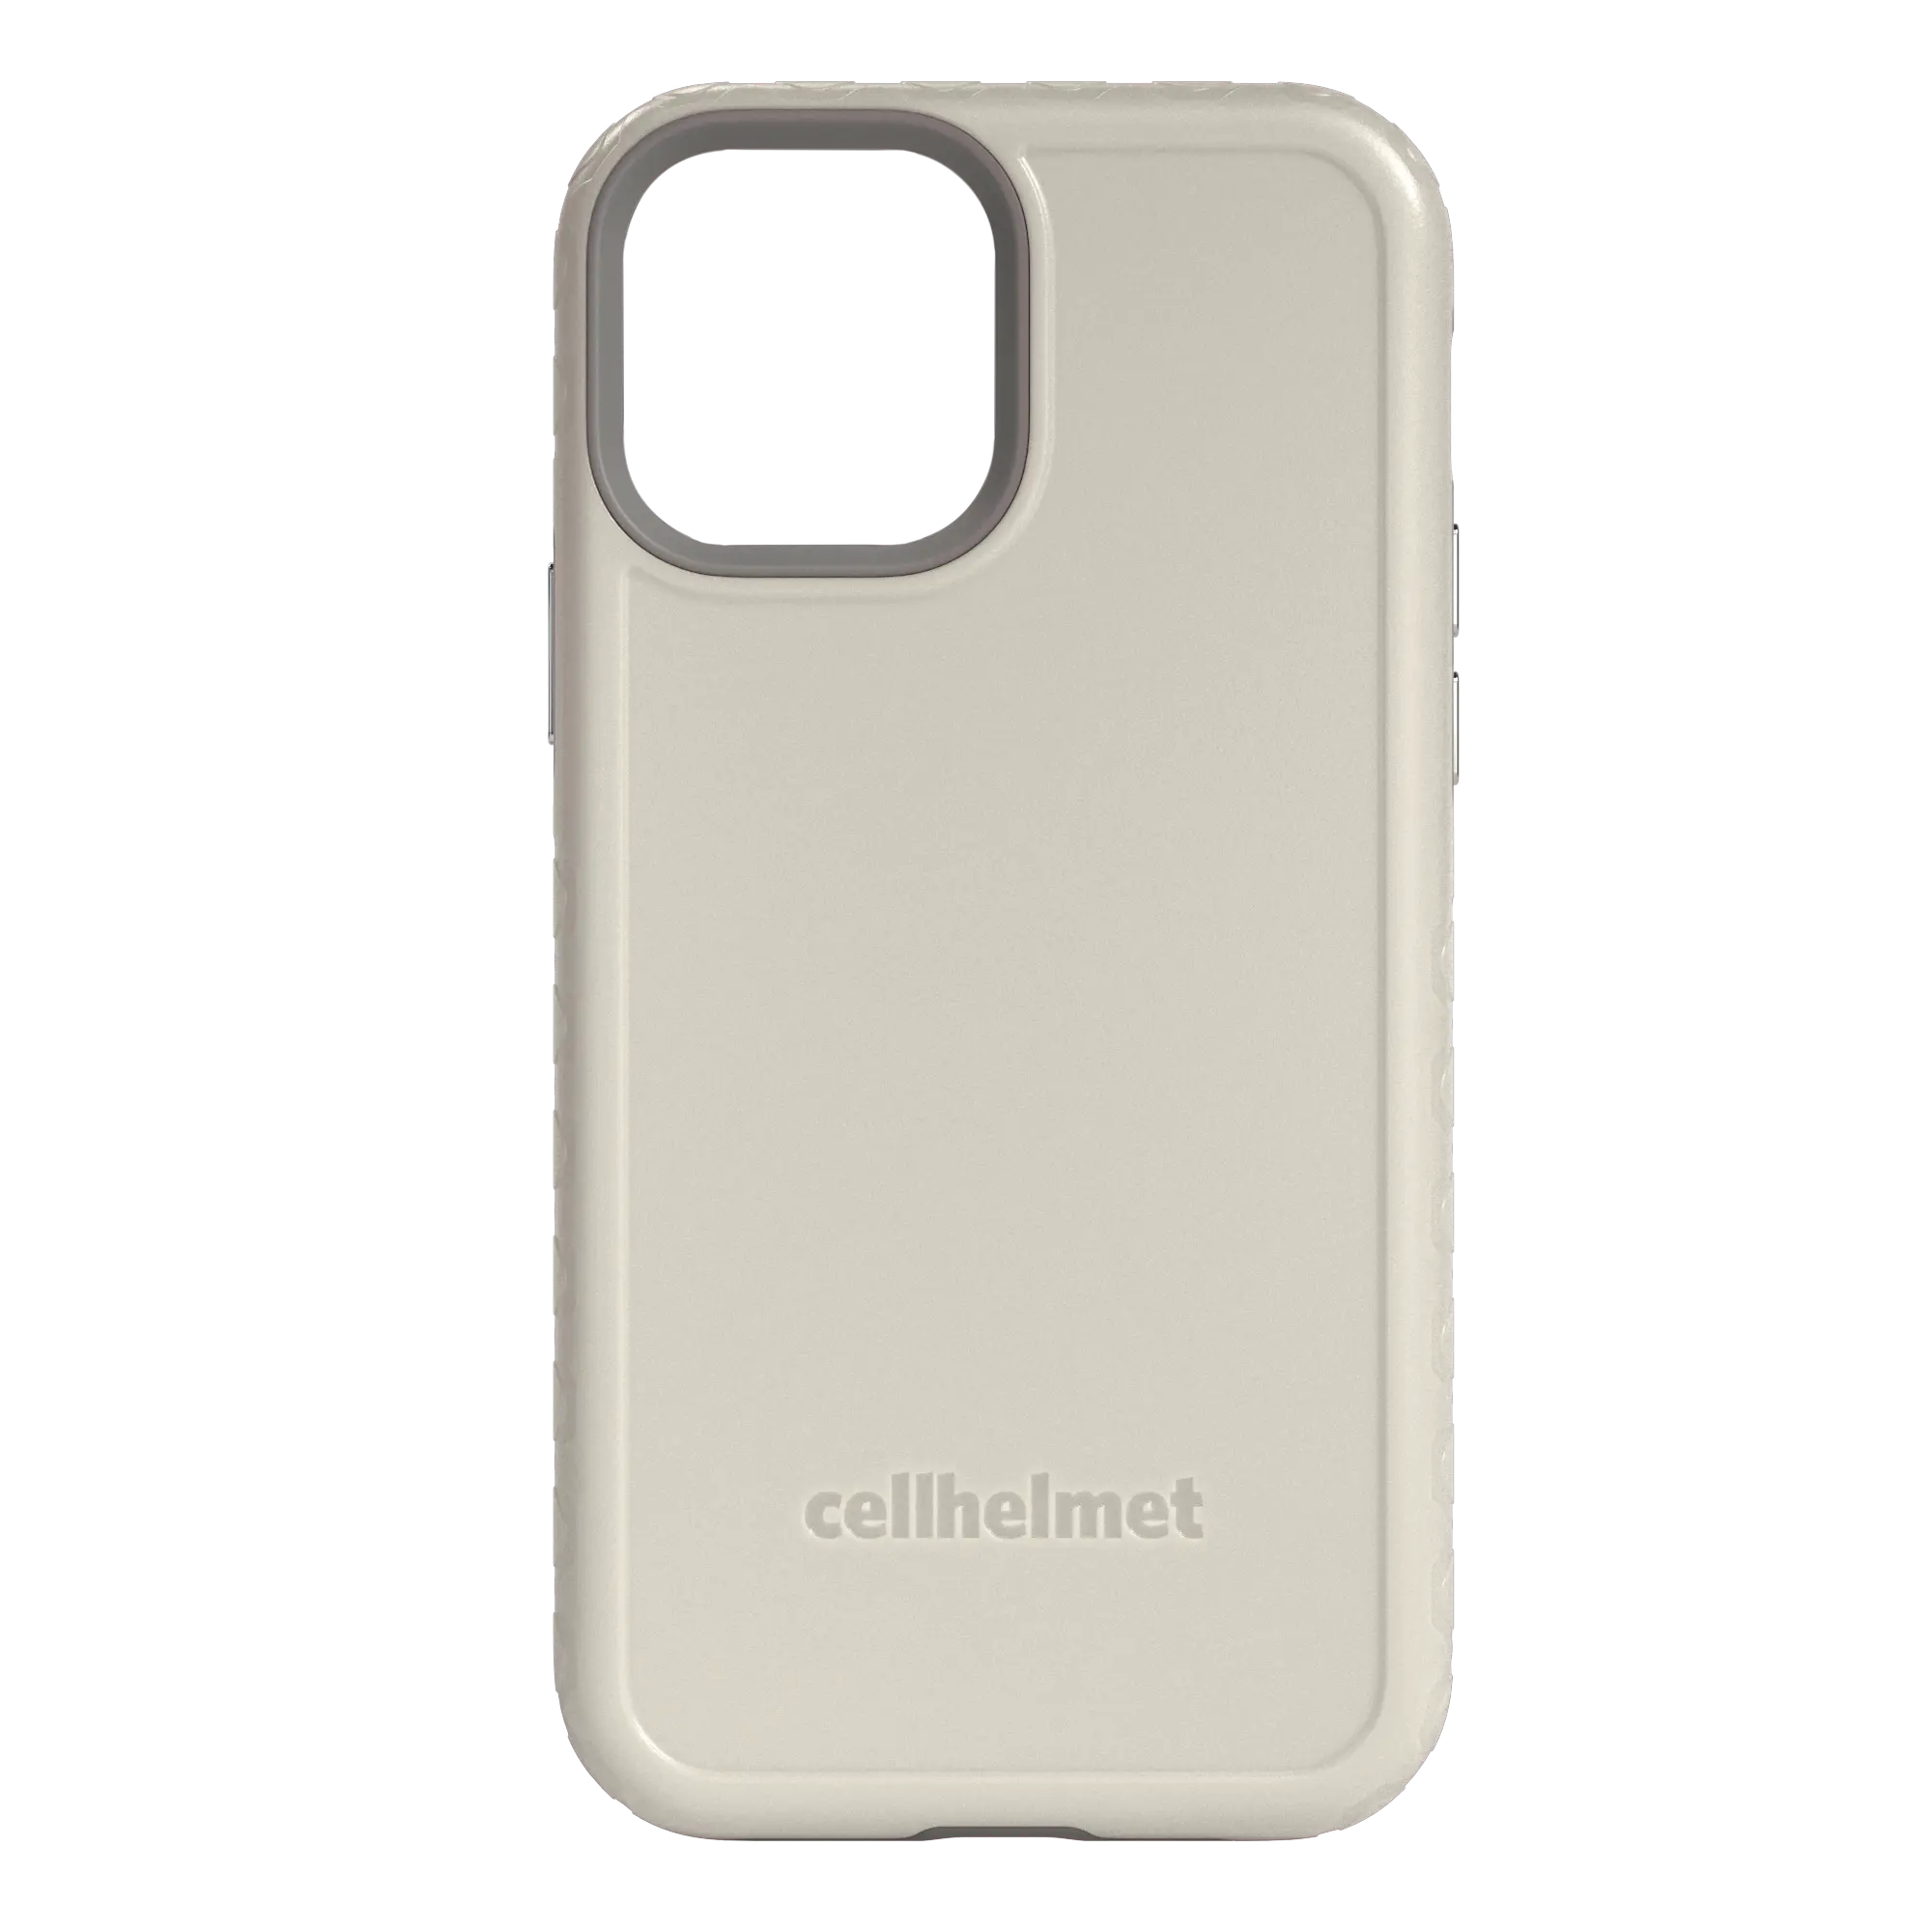 Gray cellhelmet Customizable Case for iPhone 12 Pro